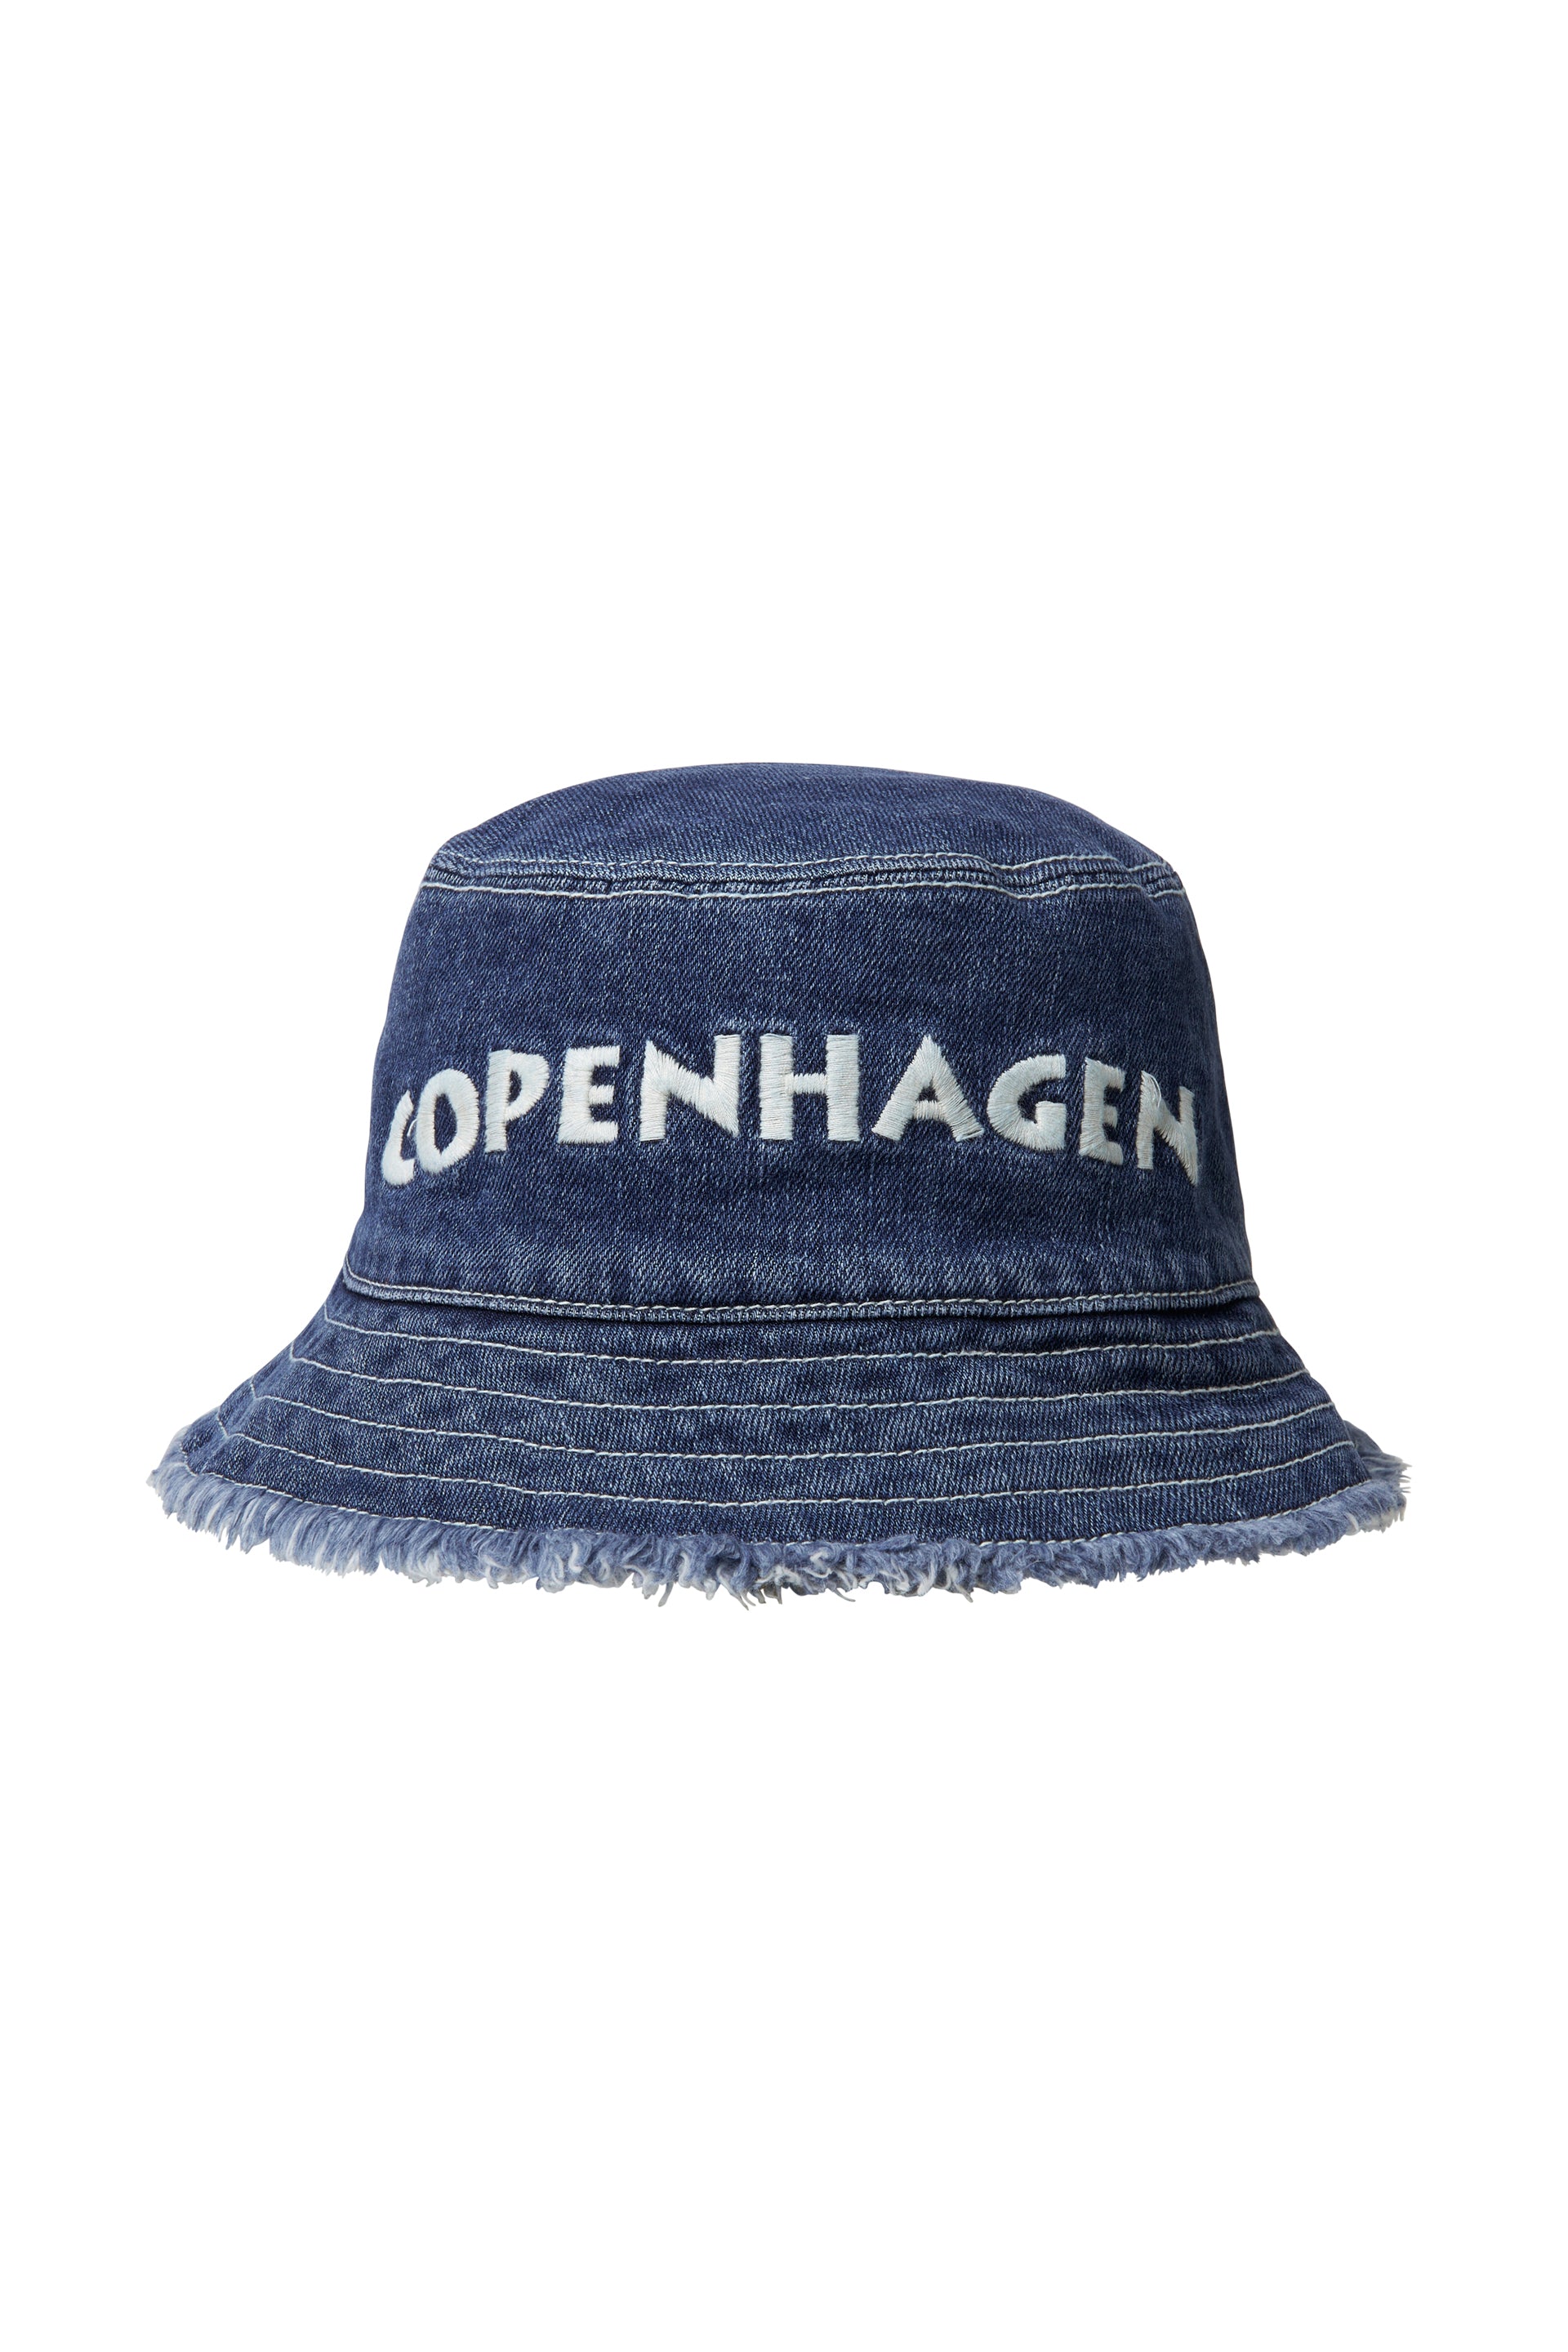 Leona - Copenhagen Denim Buckethat